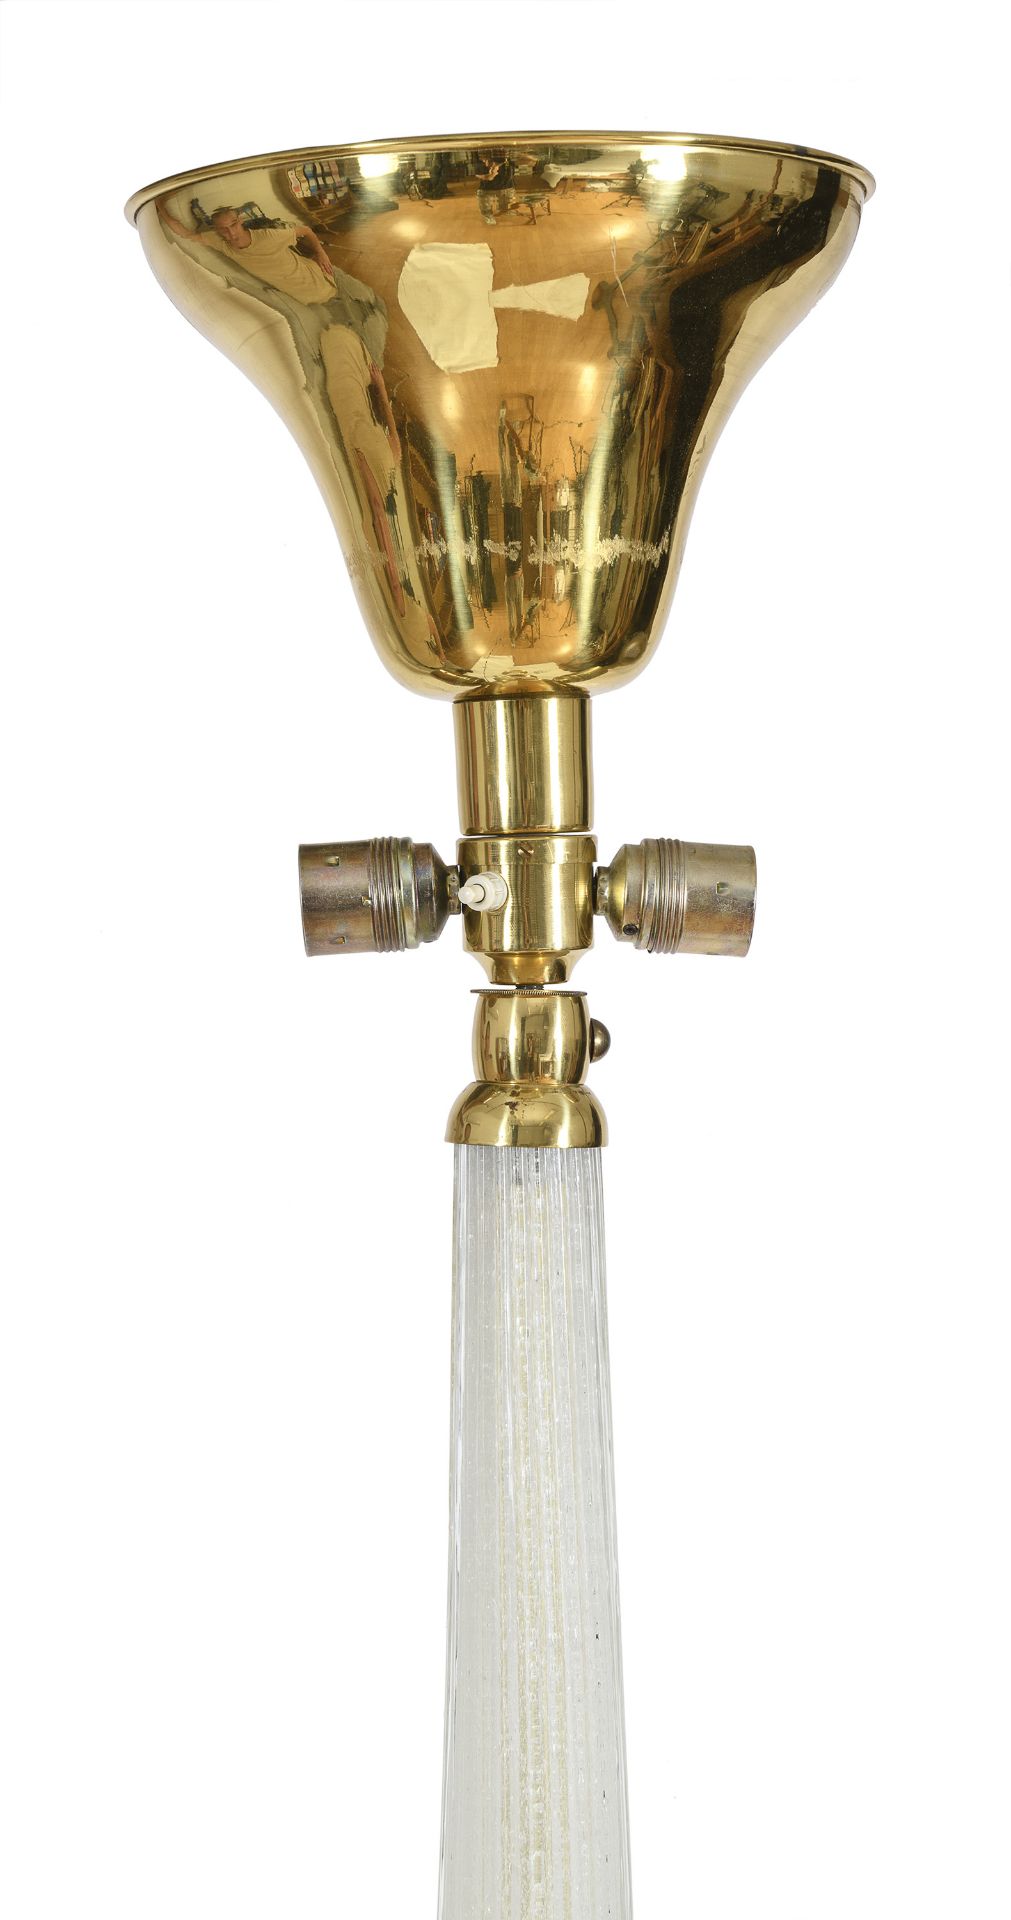 GLASS FLOOR LAMP PROBABLY VENINI 1930s - Image 2 of 2